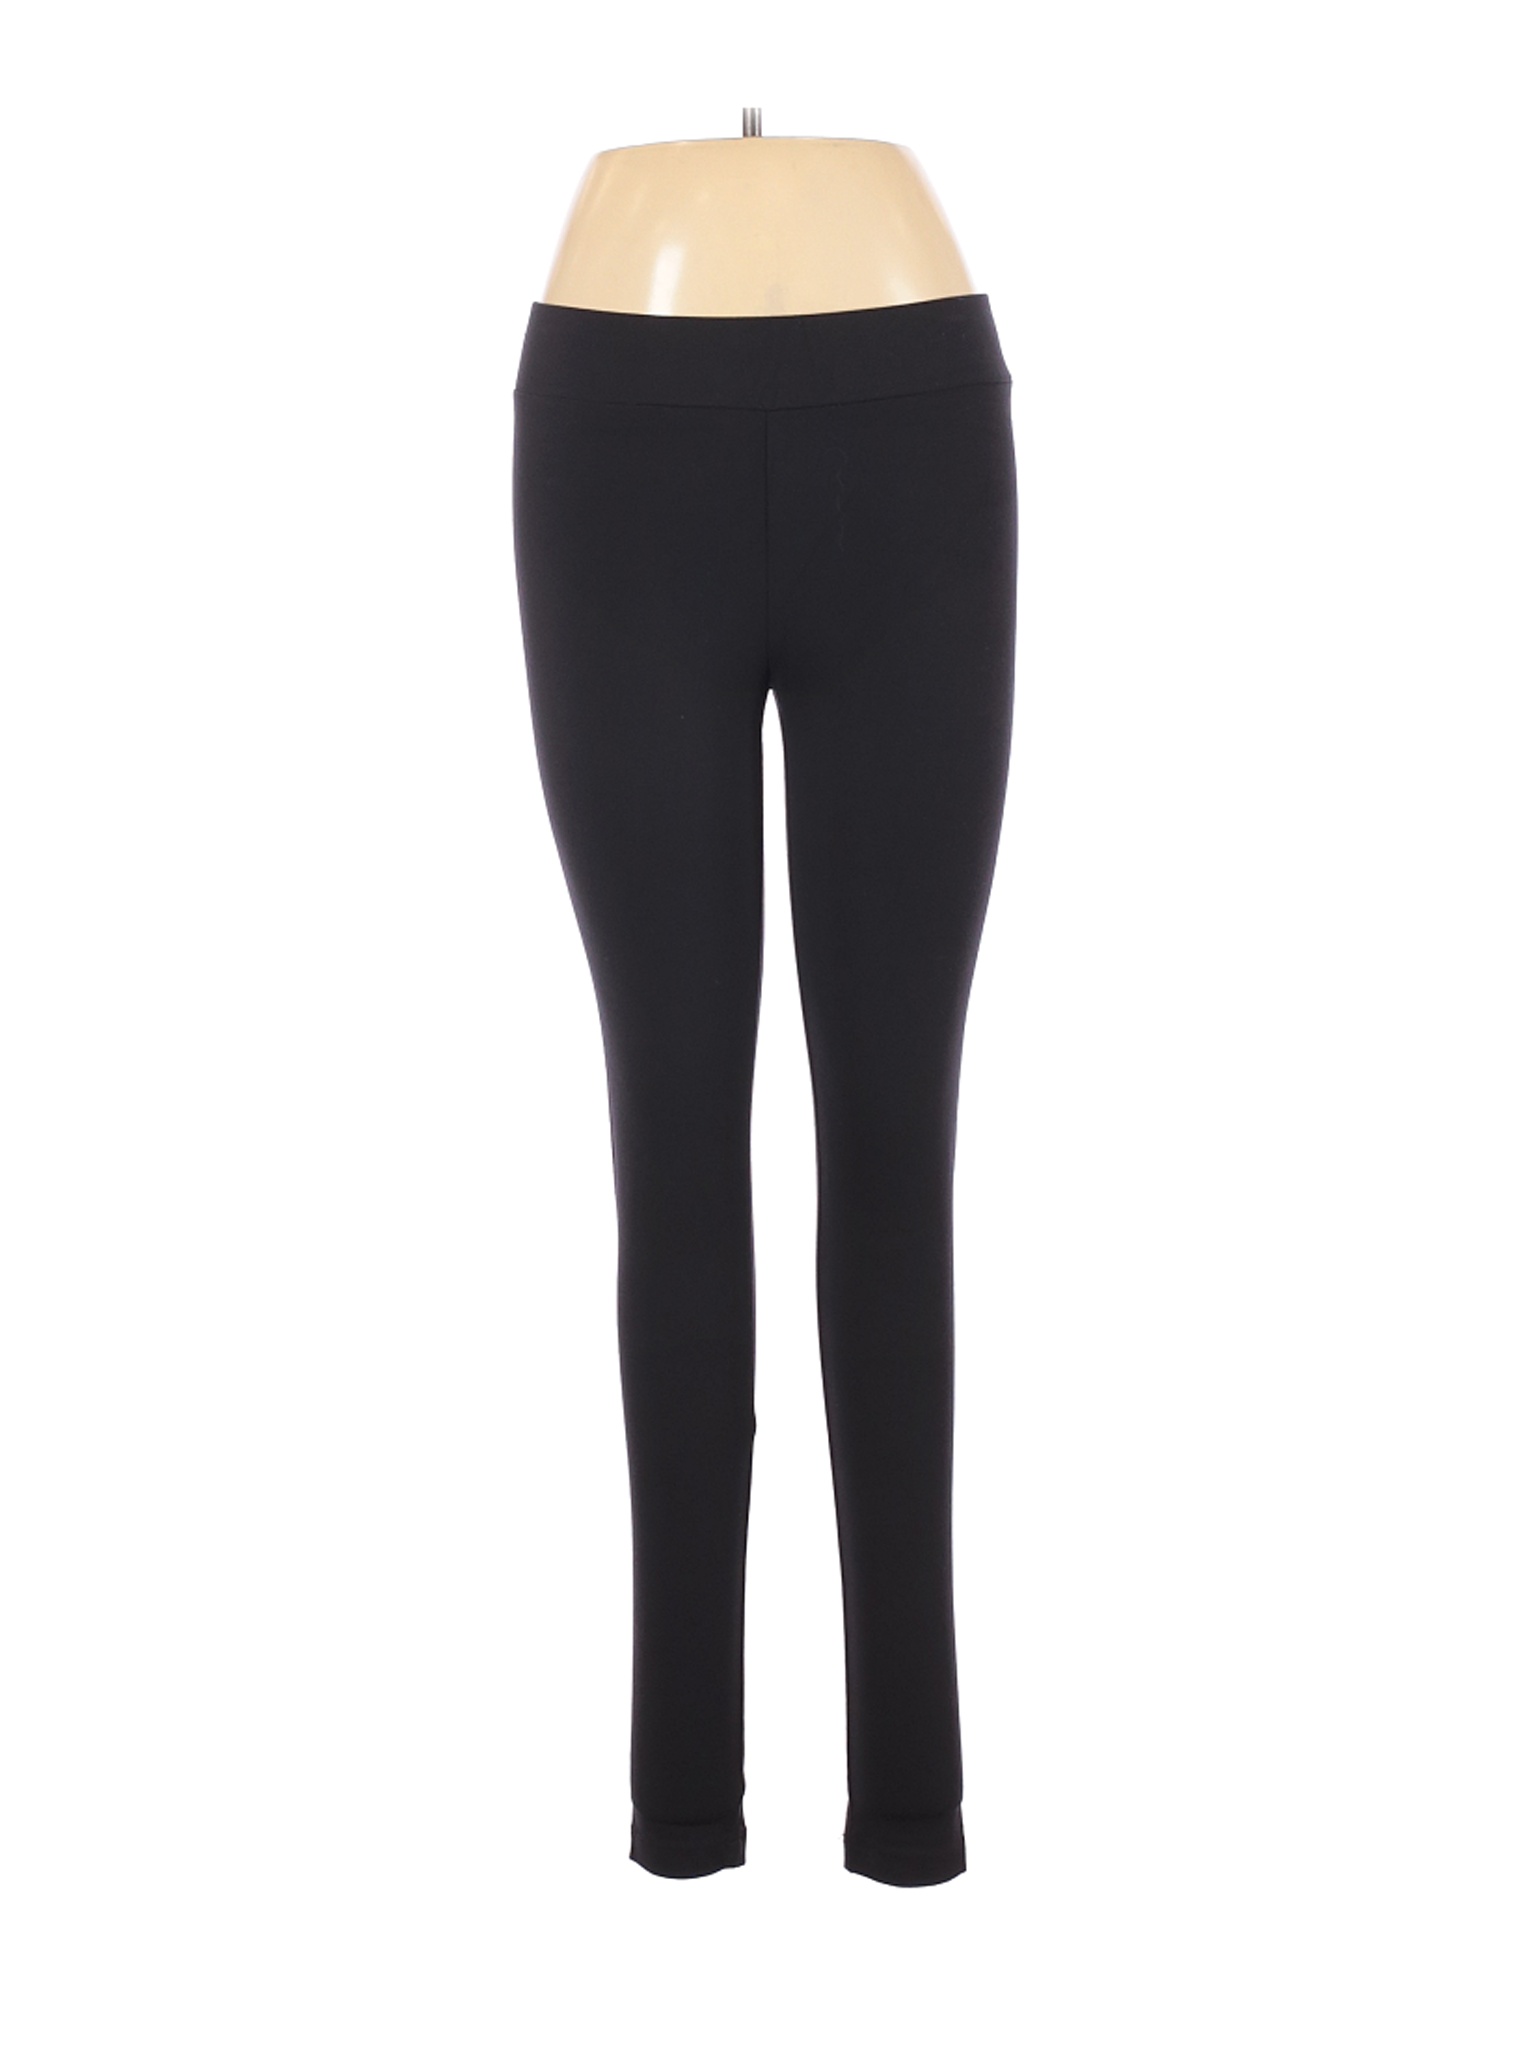 Matty M Women Black Casual Pants M | eBay